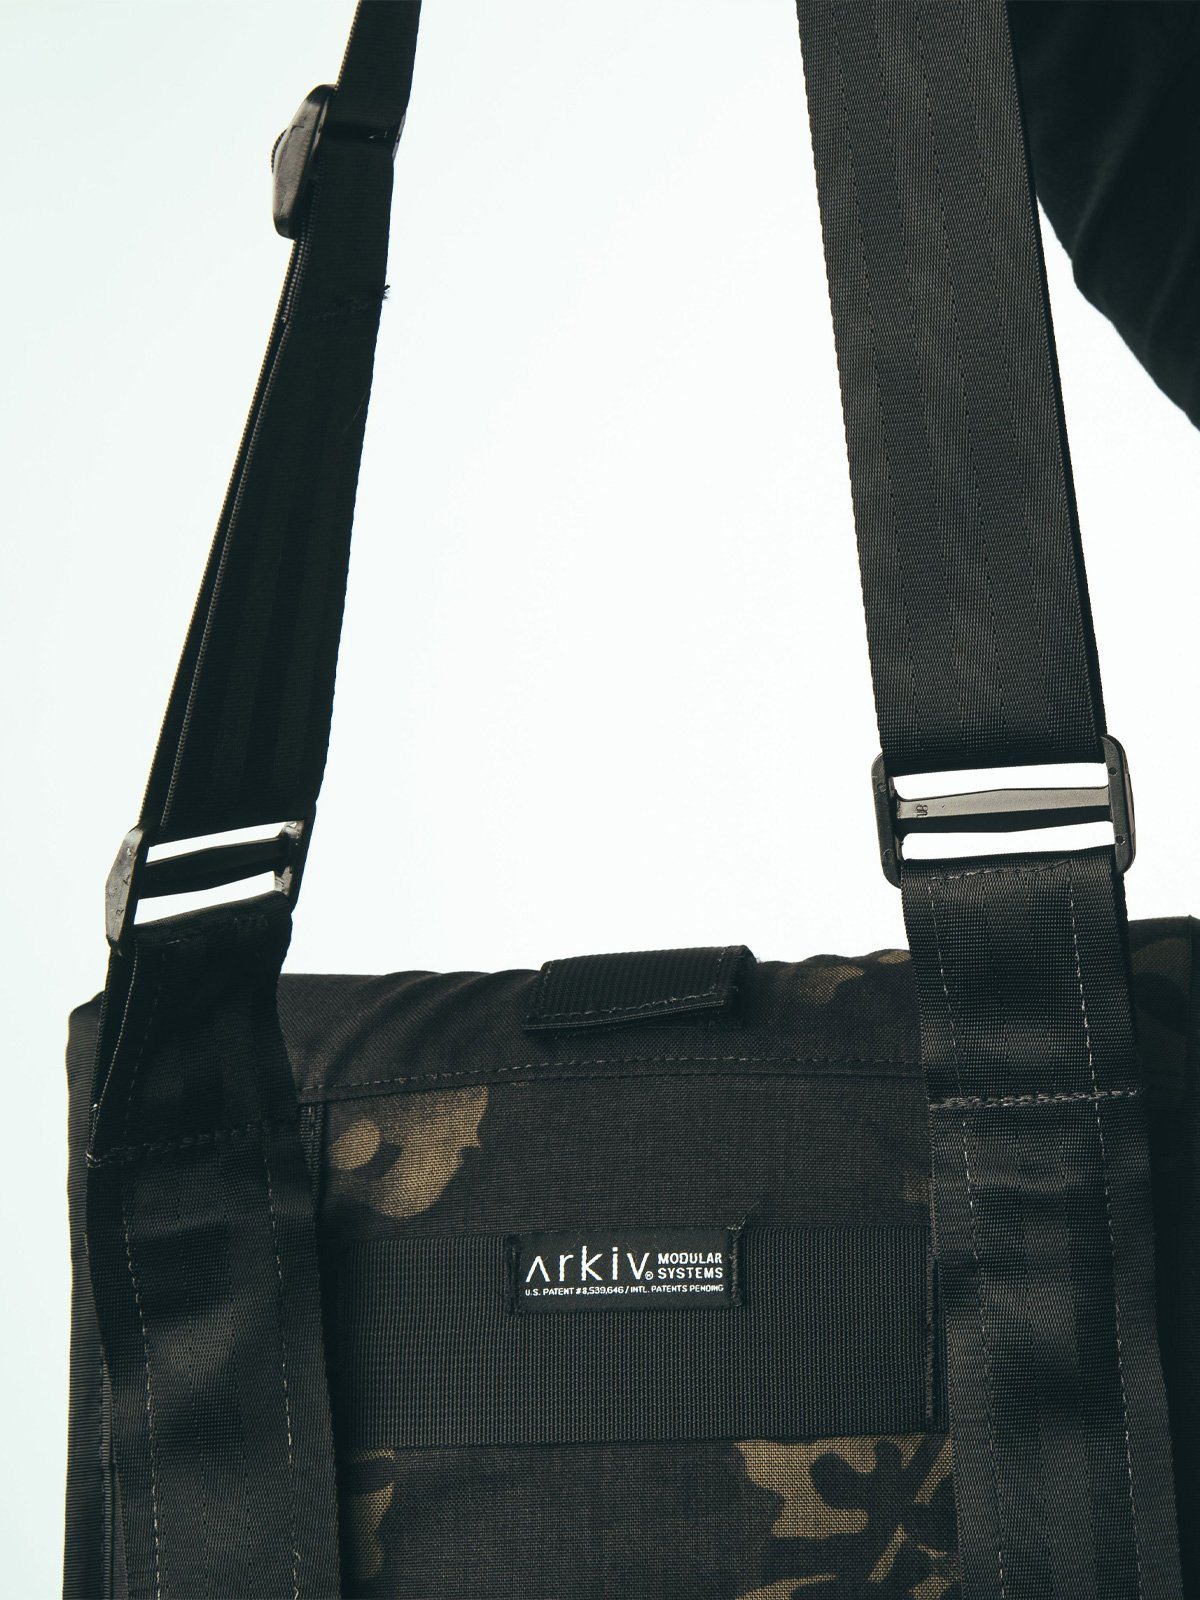 Arkiv Shoulder Strap by Mission Workshop - Weatherproof Bags & Technical Apparel - San Francisco & Los Angeles - Built to endure - Guaranteed forever